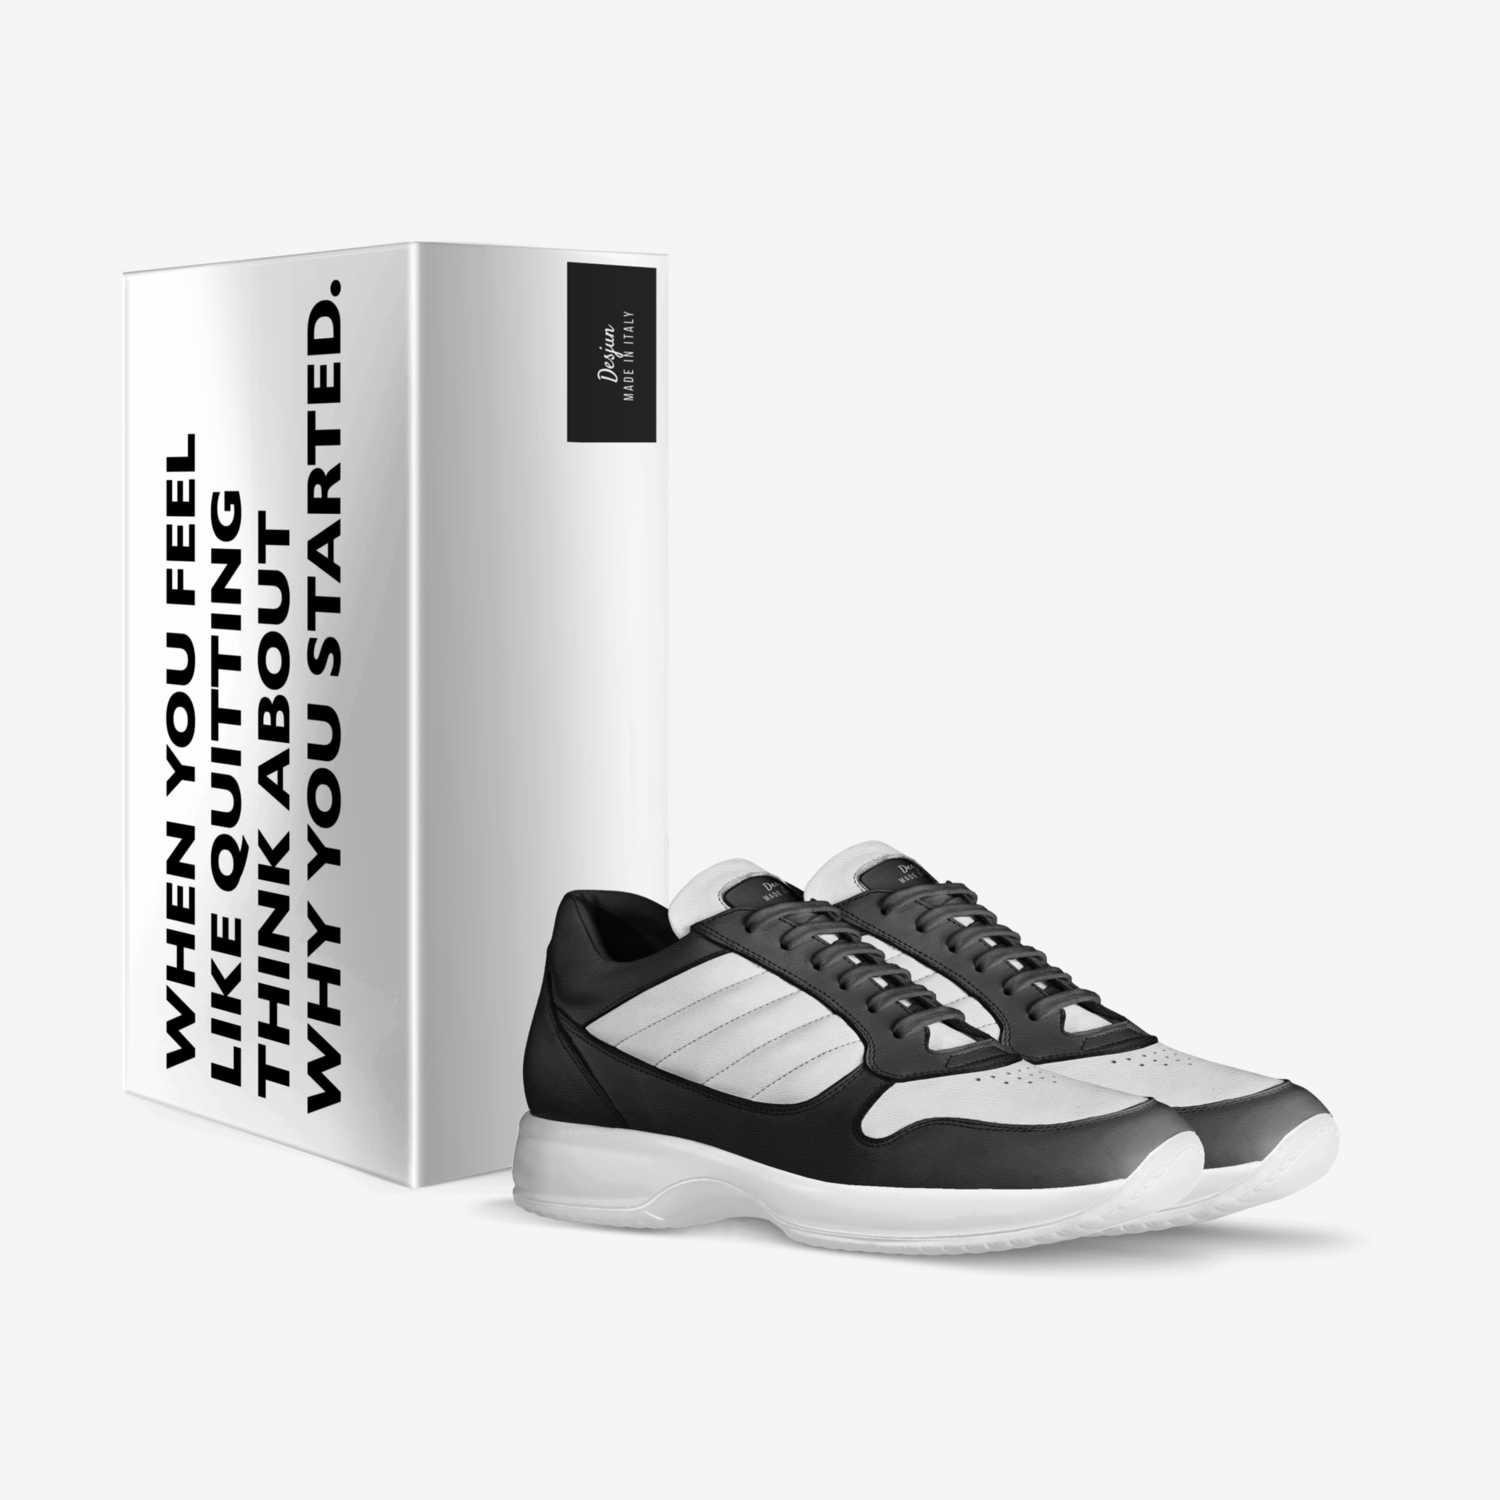 Desjun custom made in Italy shoes by Junior Desir | Box view